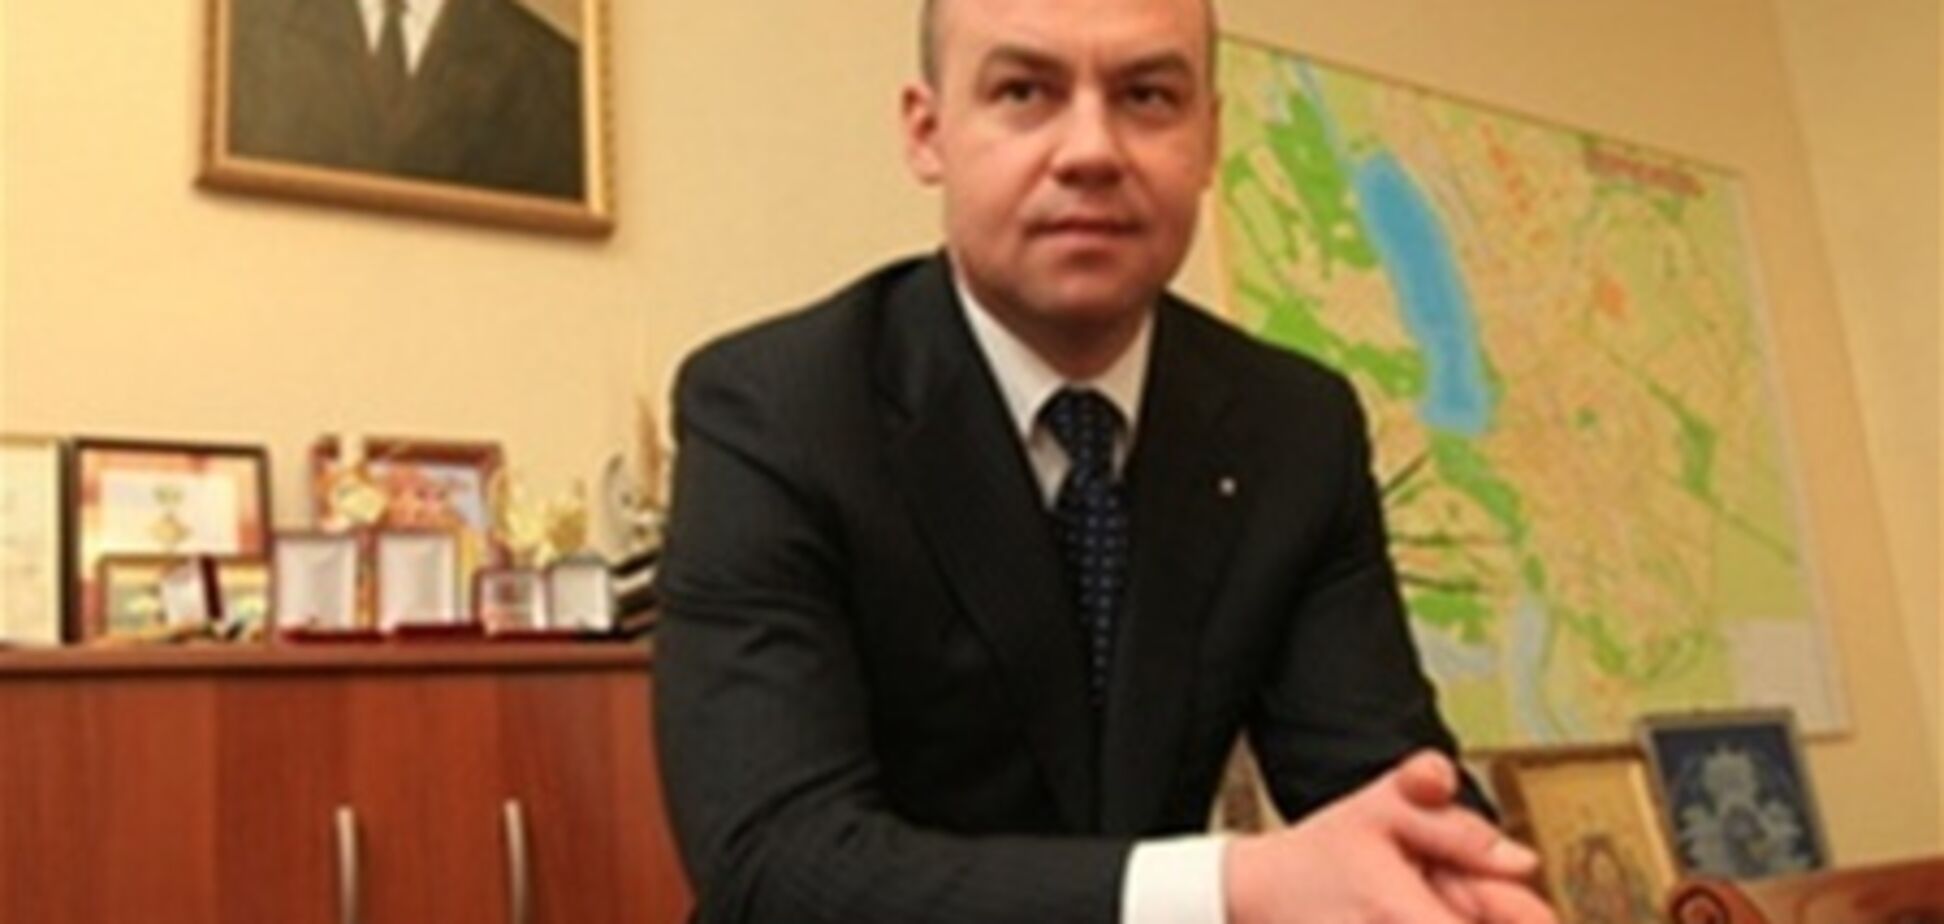 Мэр Тернополя грубо нарушил Конституцию - прокуратура